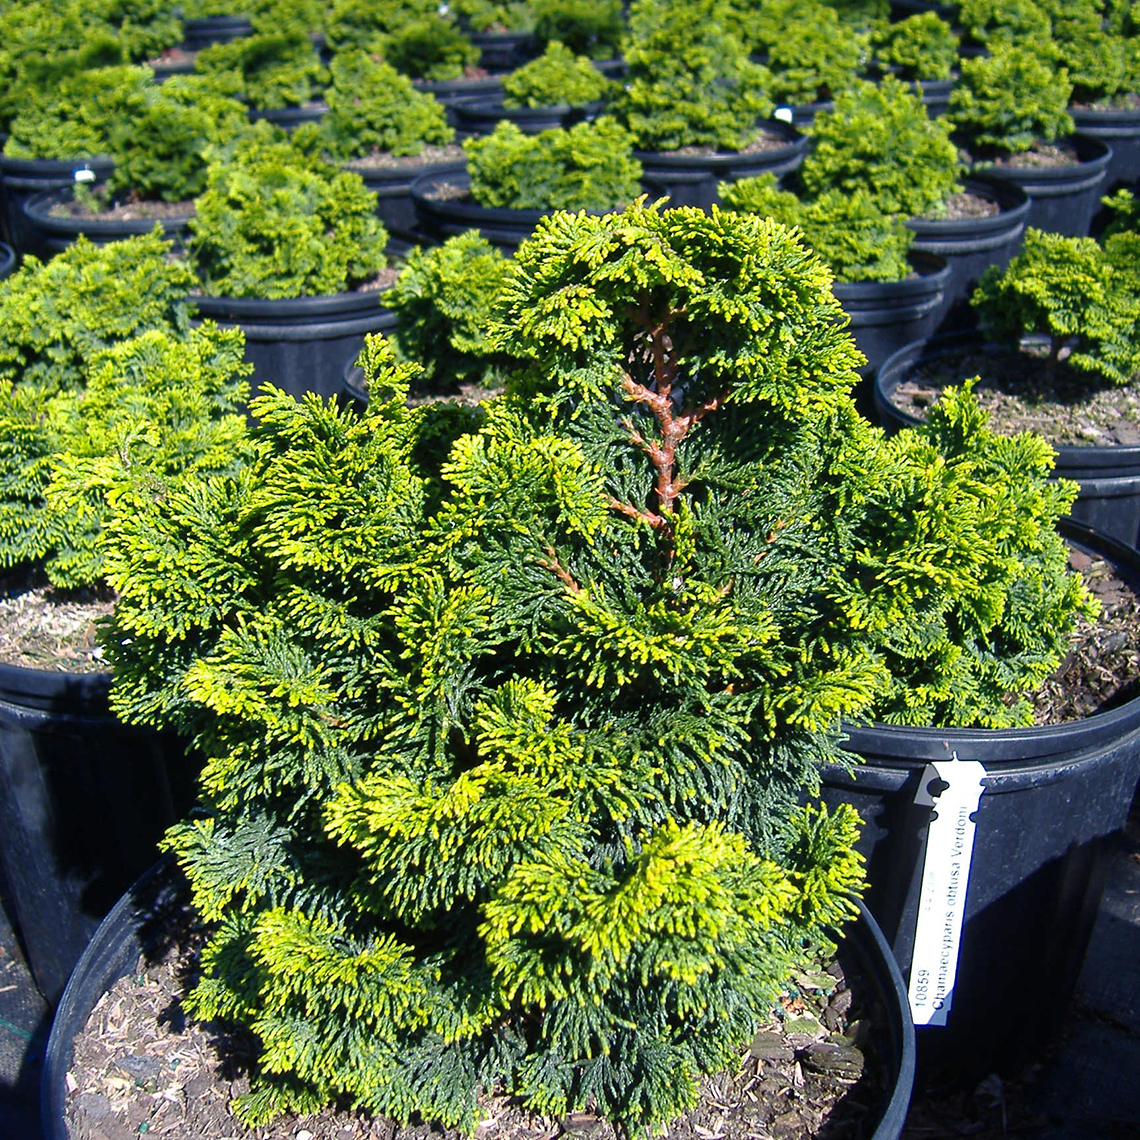 Group of Chamaecyparis Verdoni plants in black pots in greenhouse